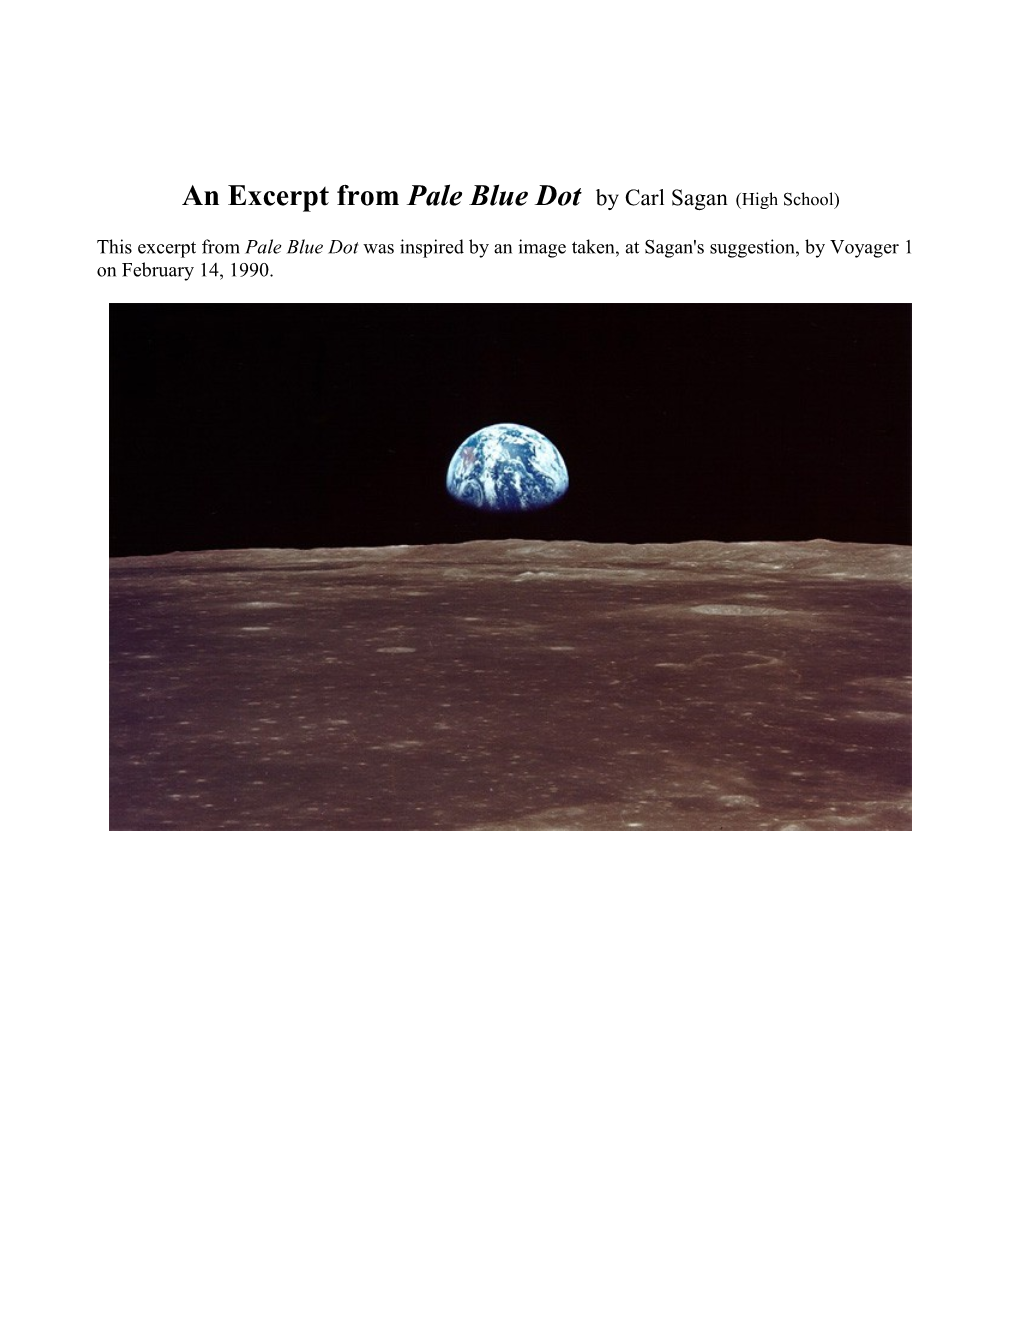 An Excerpt from Pale Blue Dot by Carl Sagan(High School)